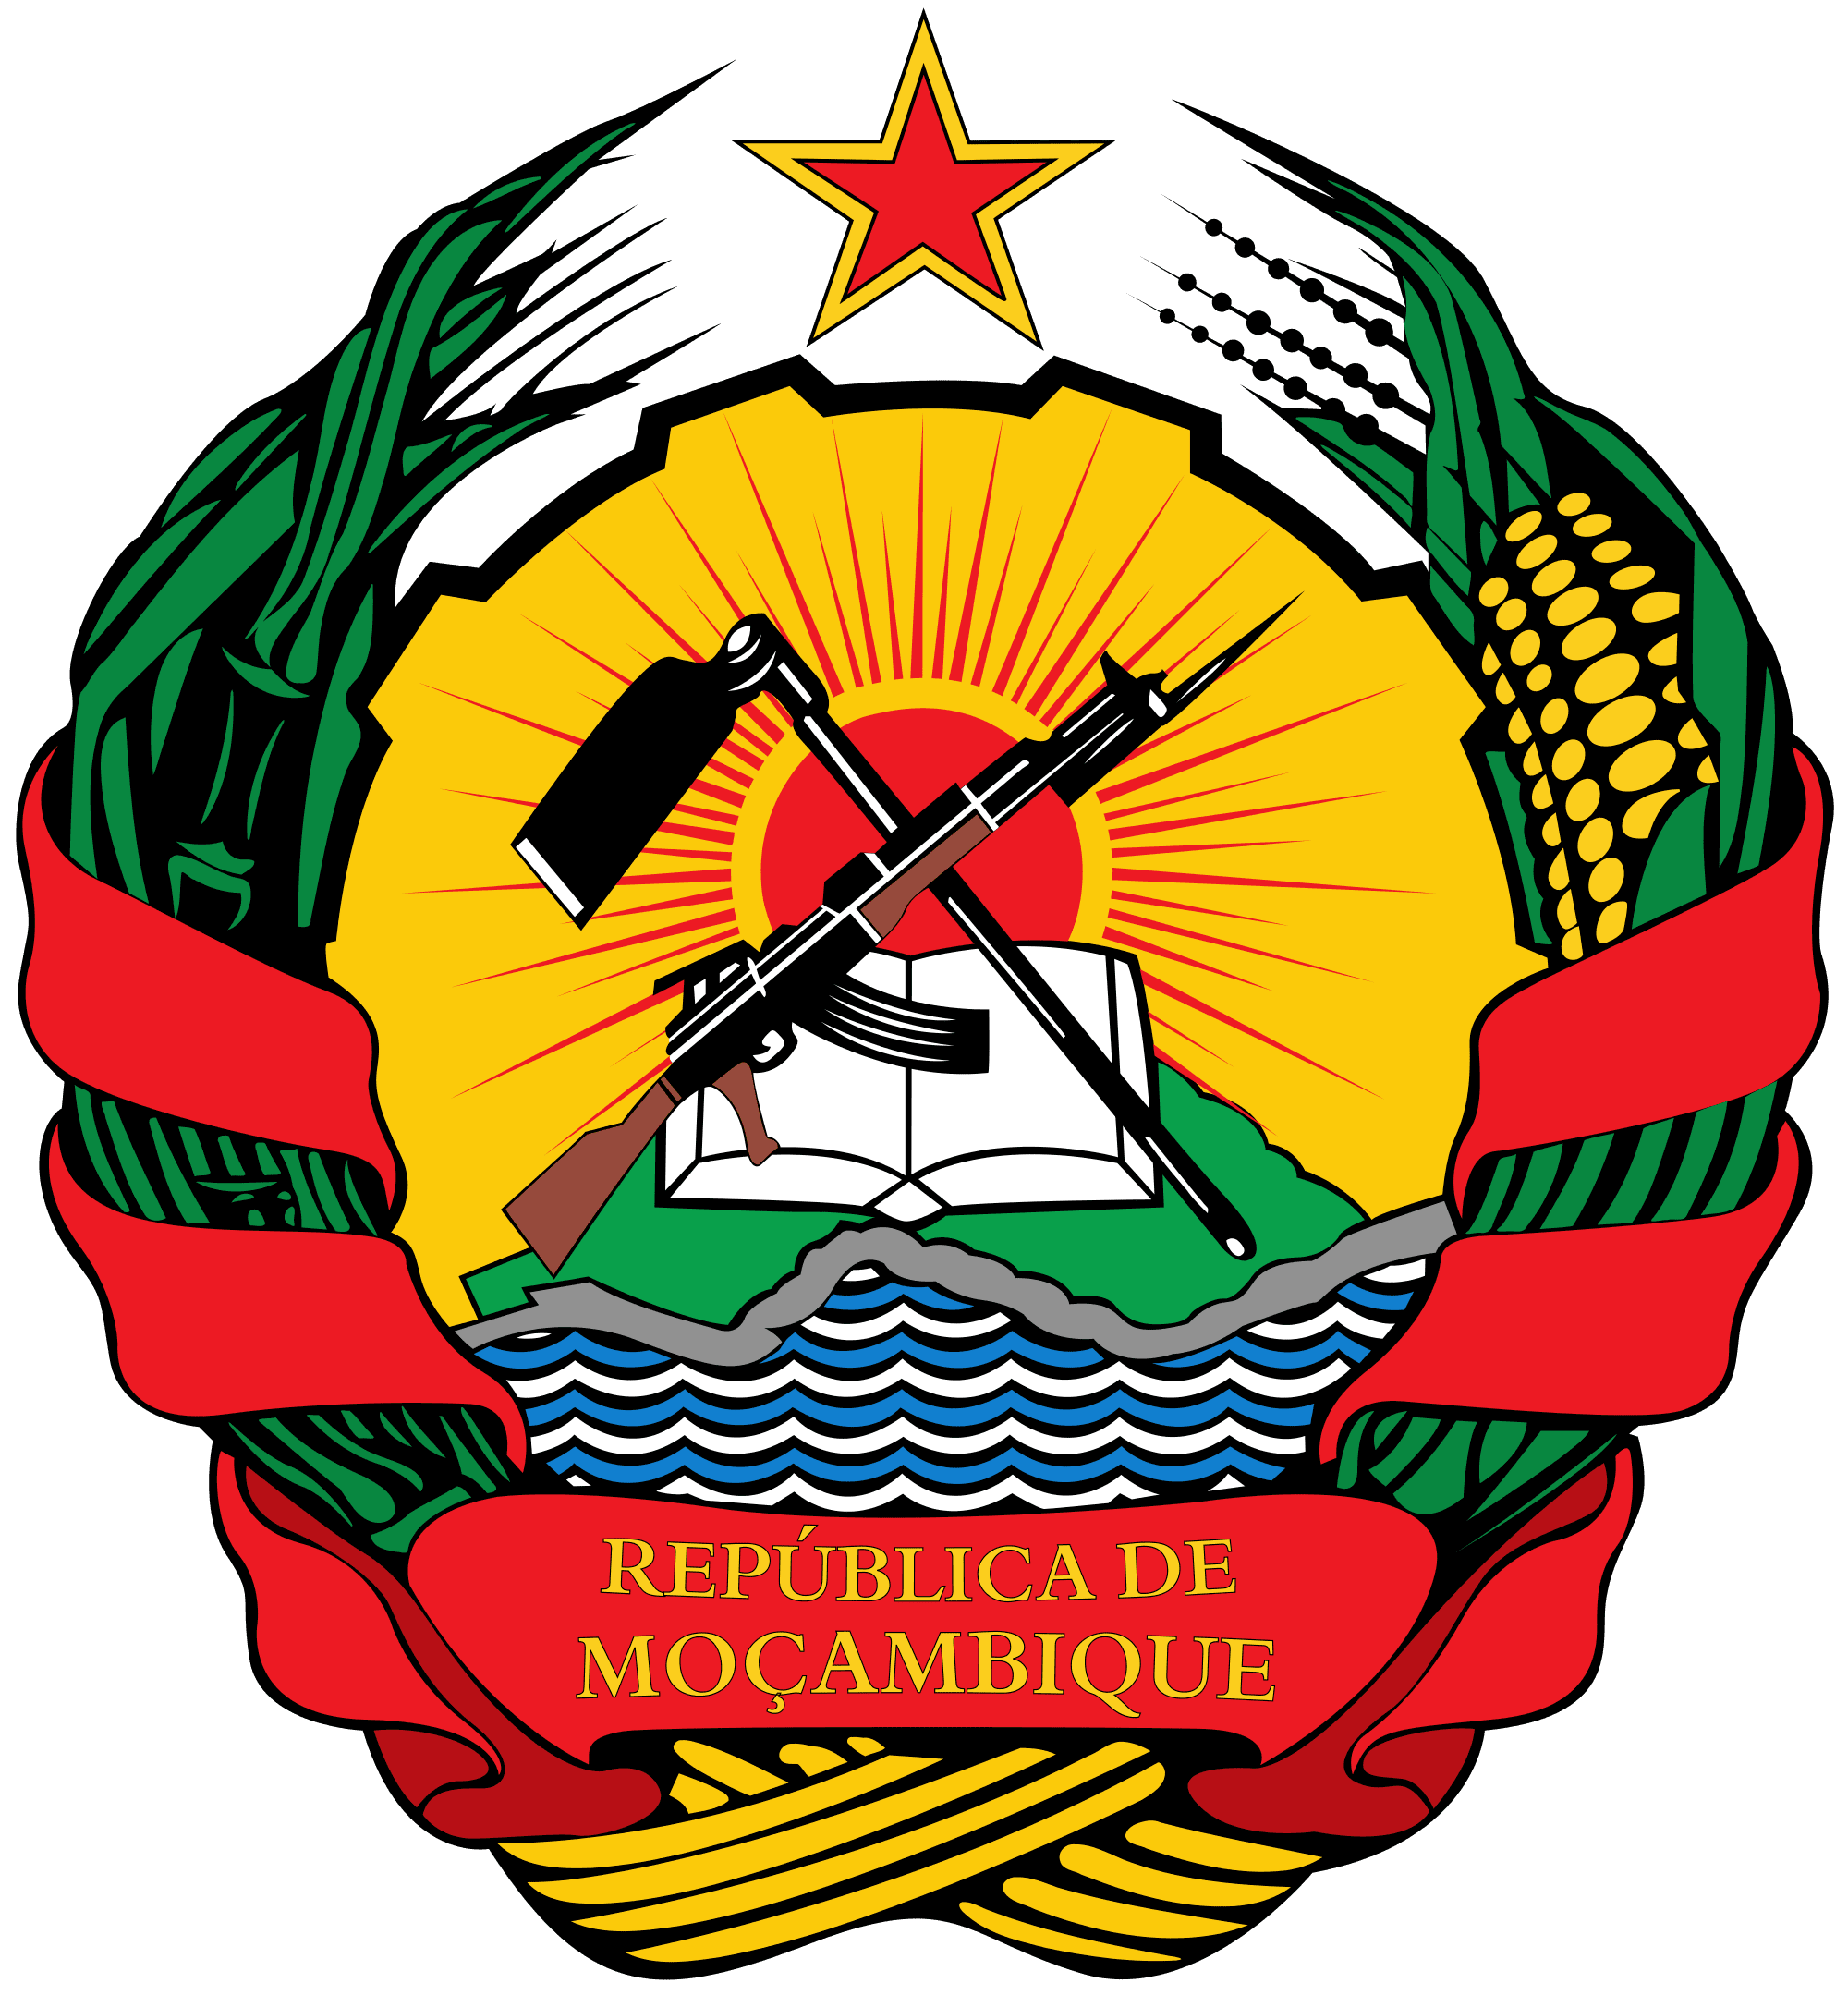 Mozambique Government